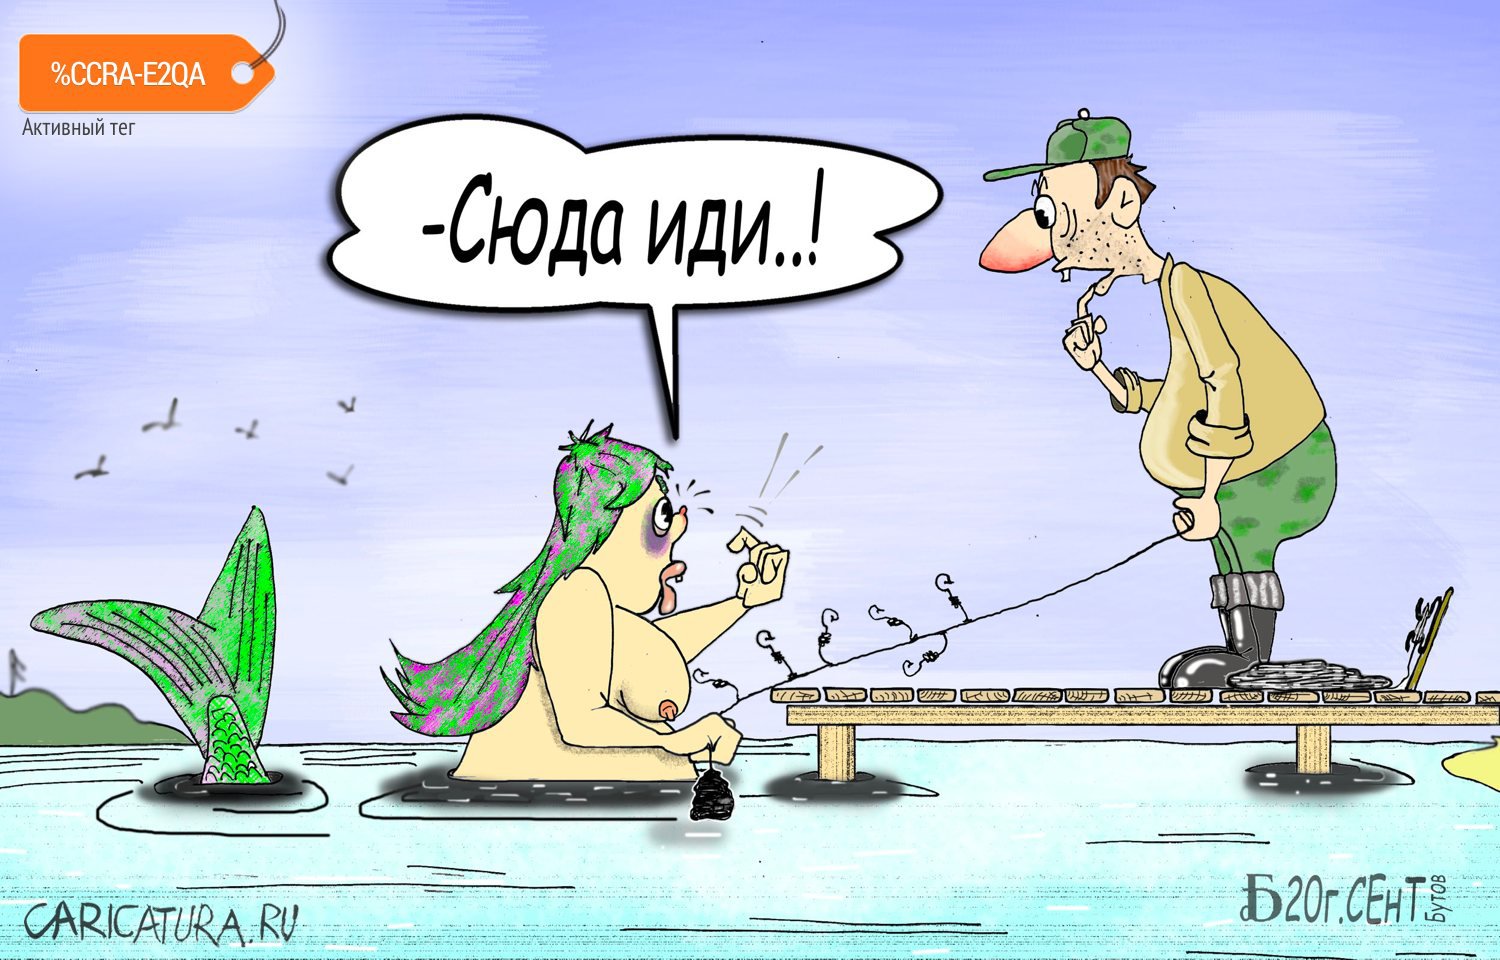 Карикатура "Про тихую гавань", Борис Демин